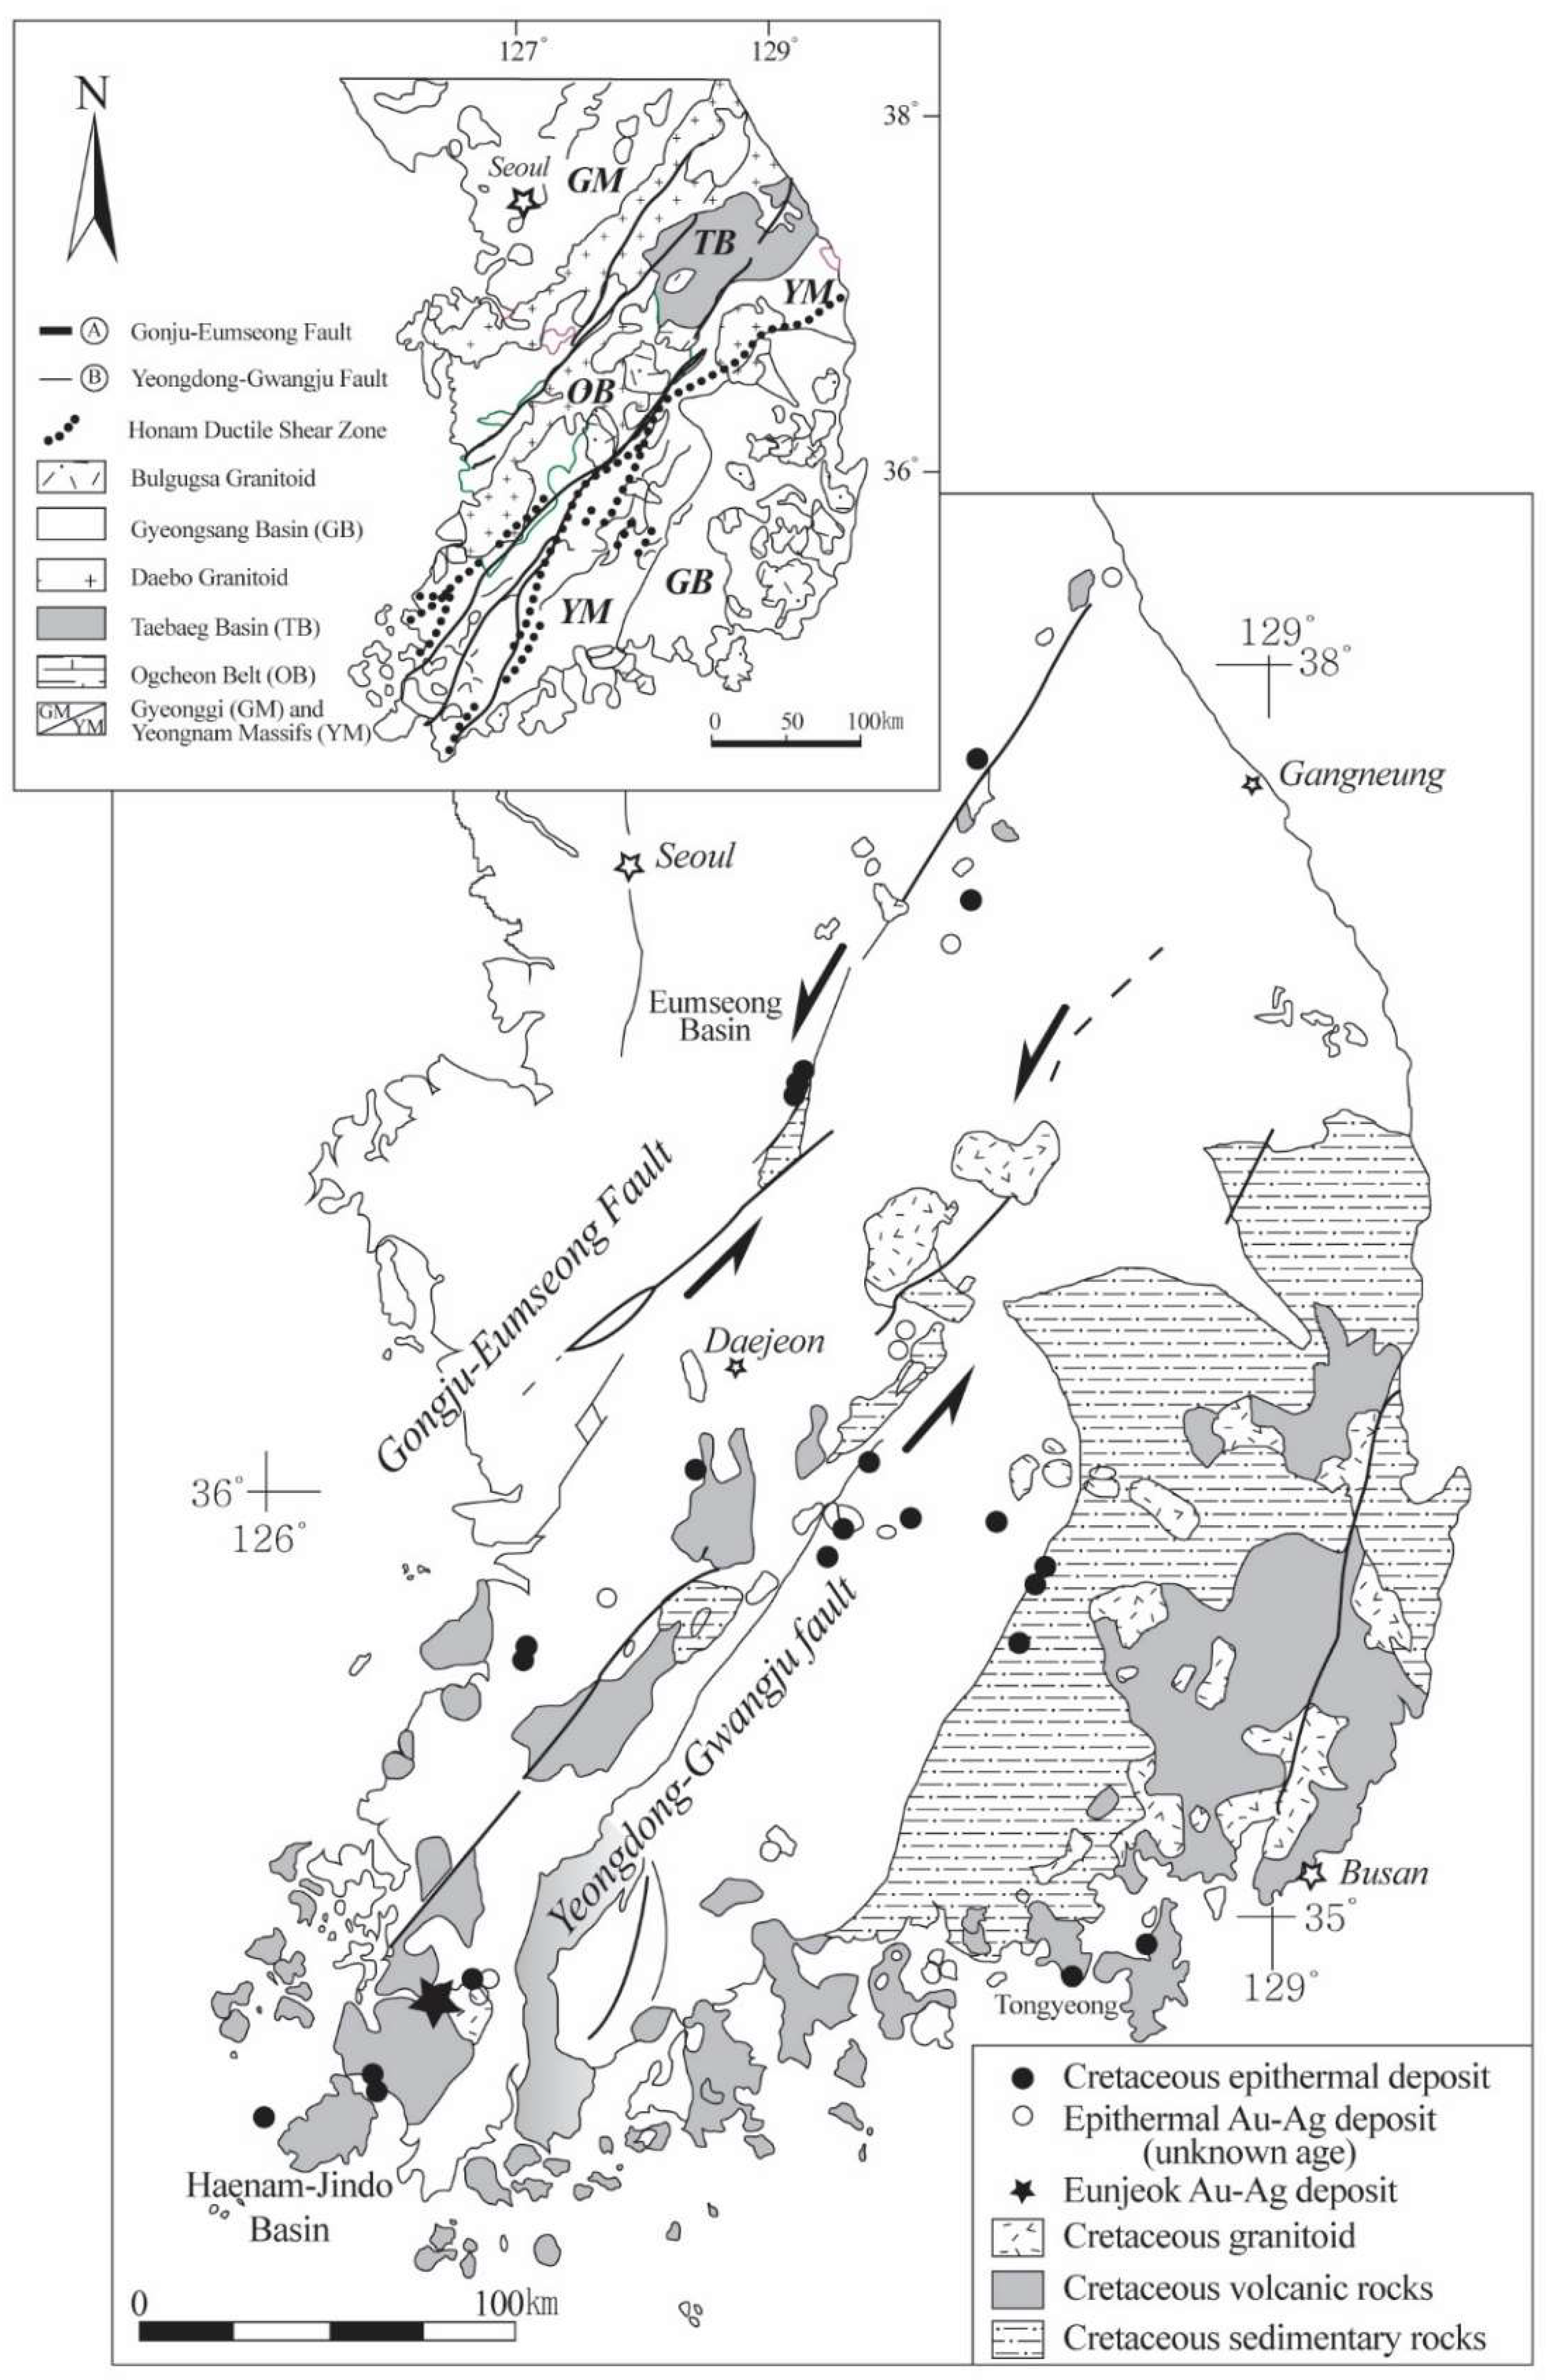 Quantitative resource assessment of hydrothermal gold deposits